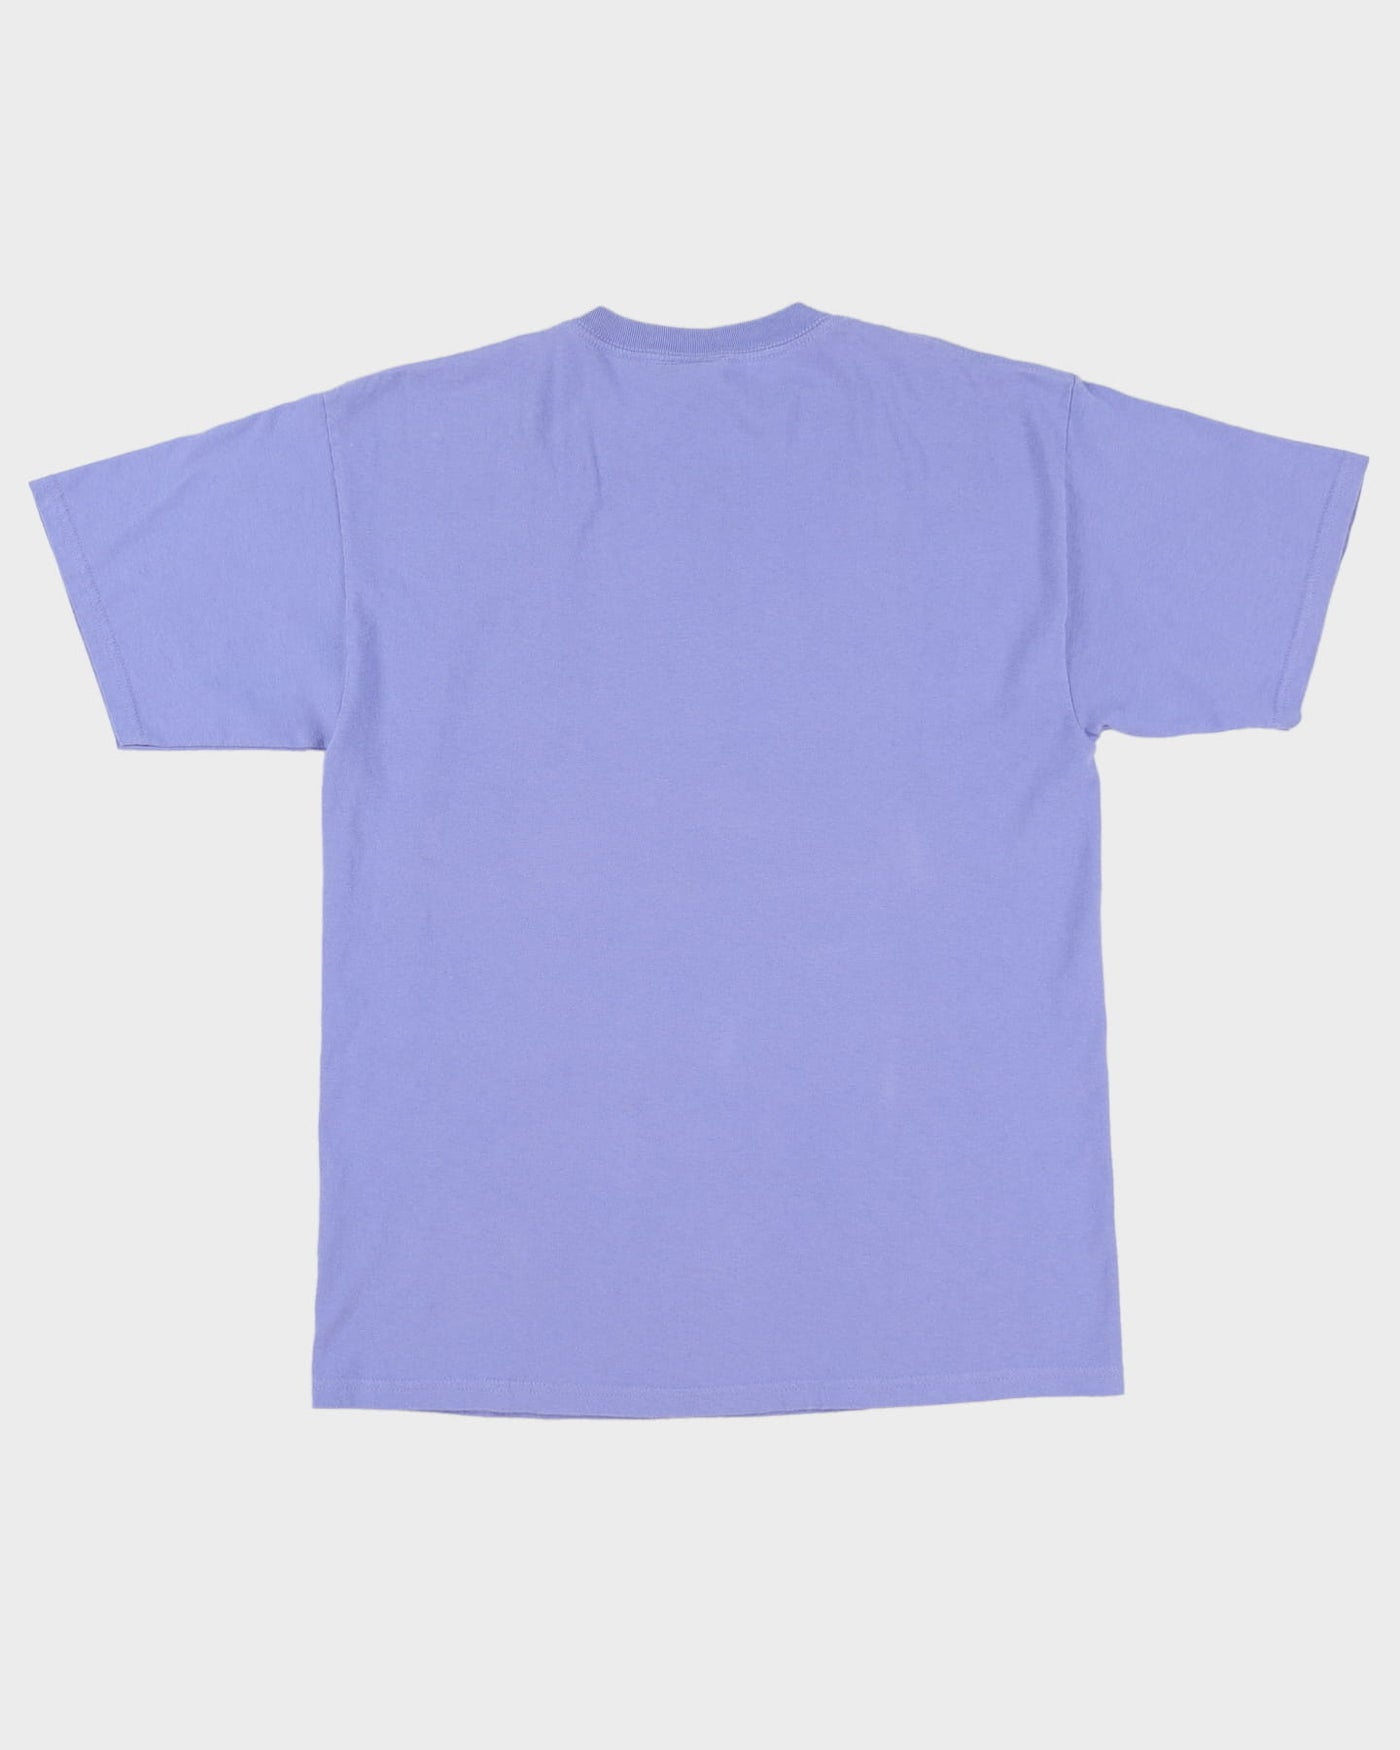 00s MGM Mirage Las Vegas Purple Graphic T-Shirt - L